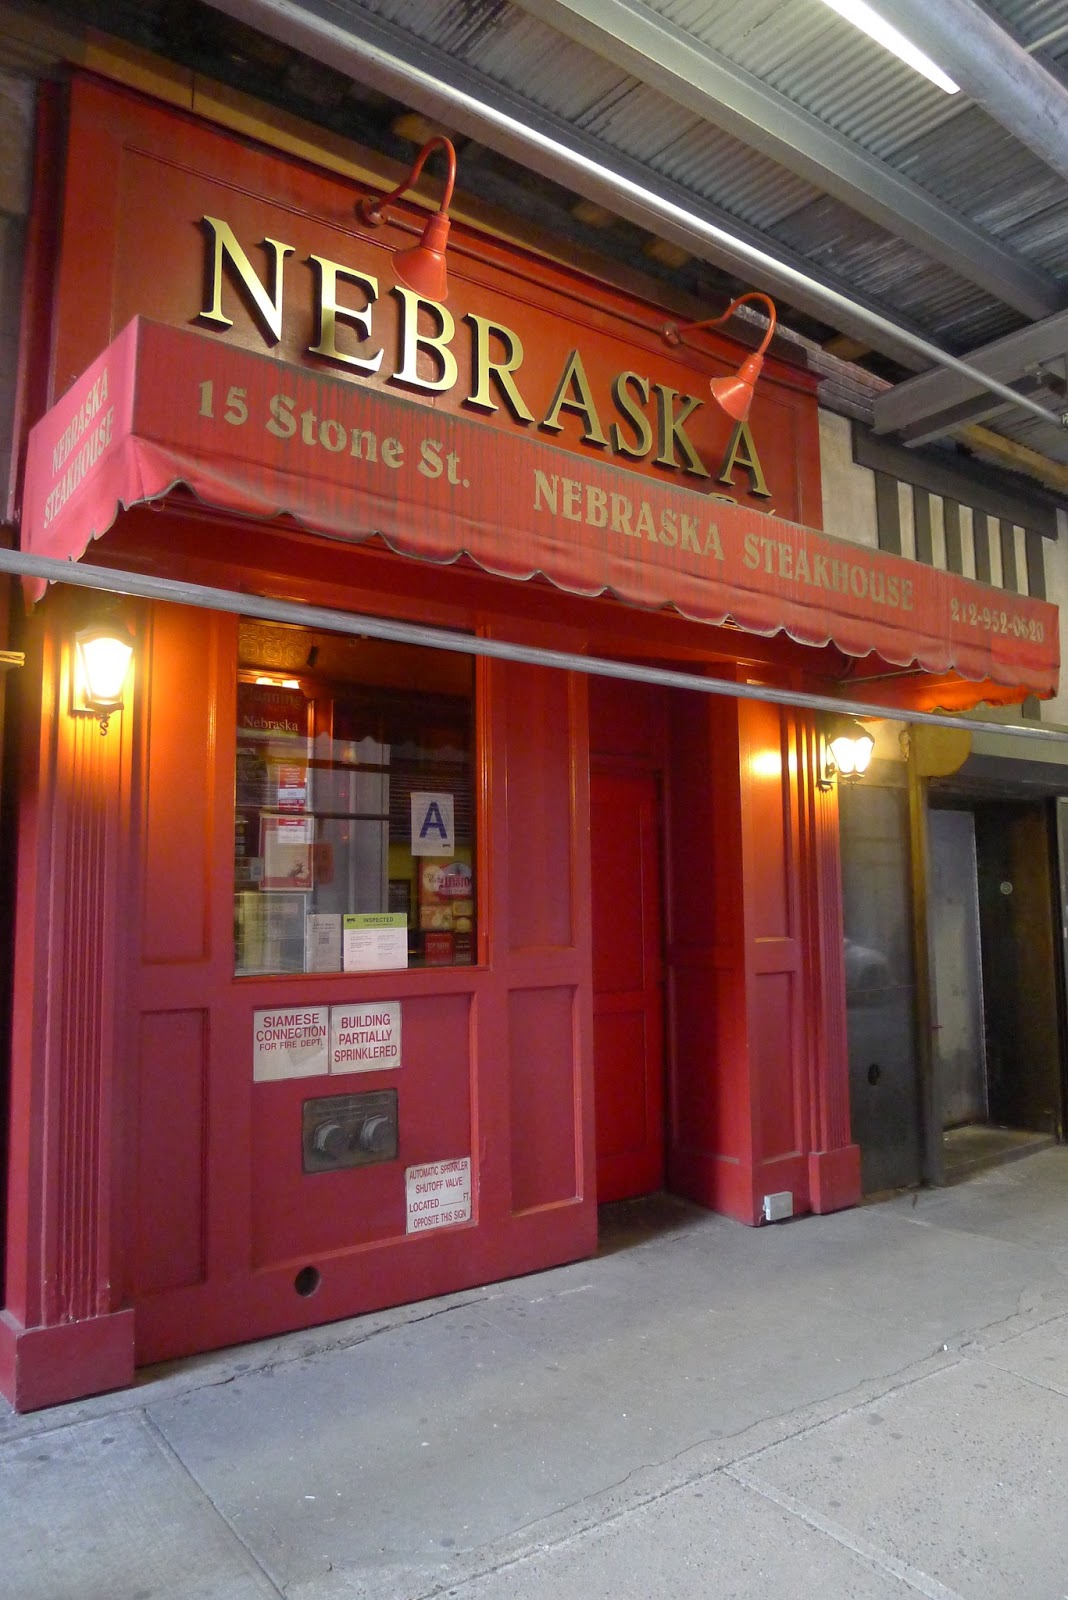 Photo of Nebraska Steakhouse in New York City, New York, United States - 1 Picture of Restaurant, Food, Point of interest, Establishment, Bar